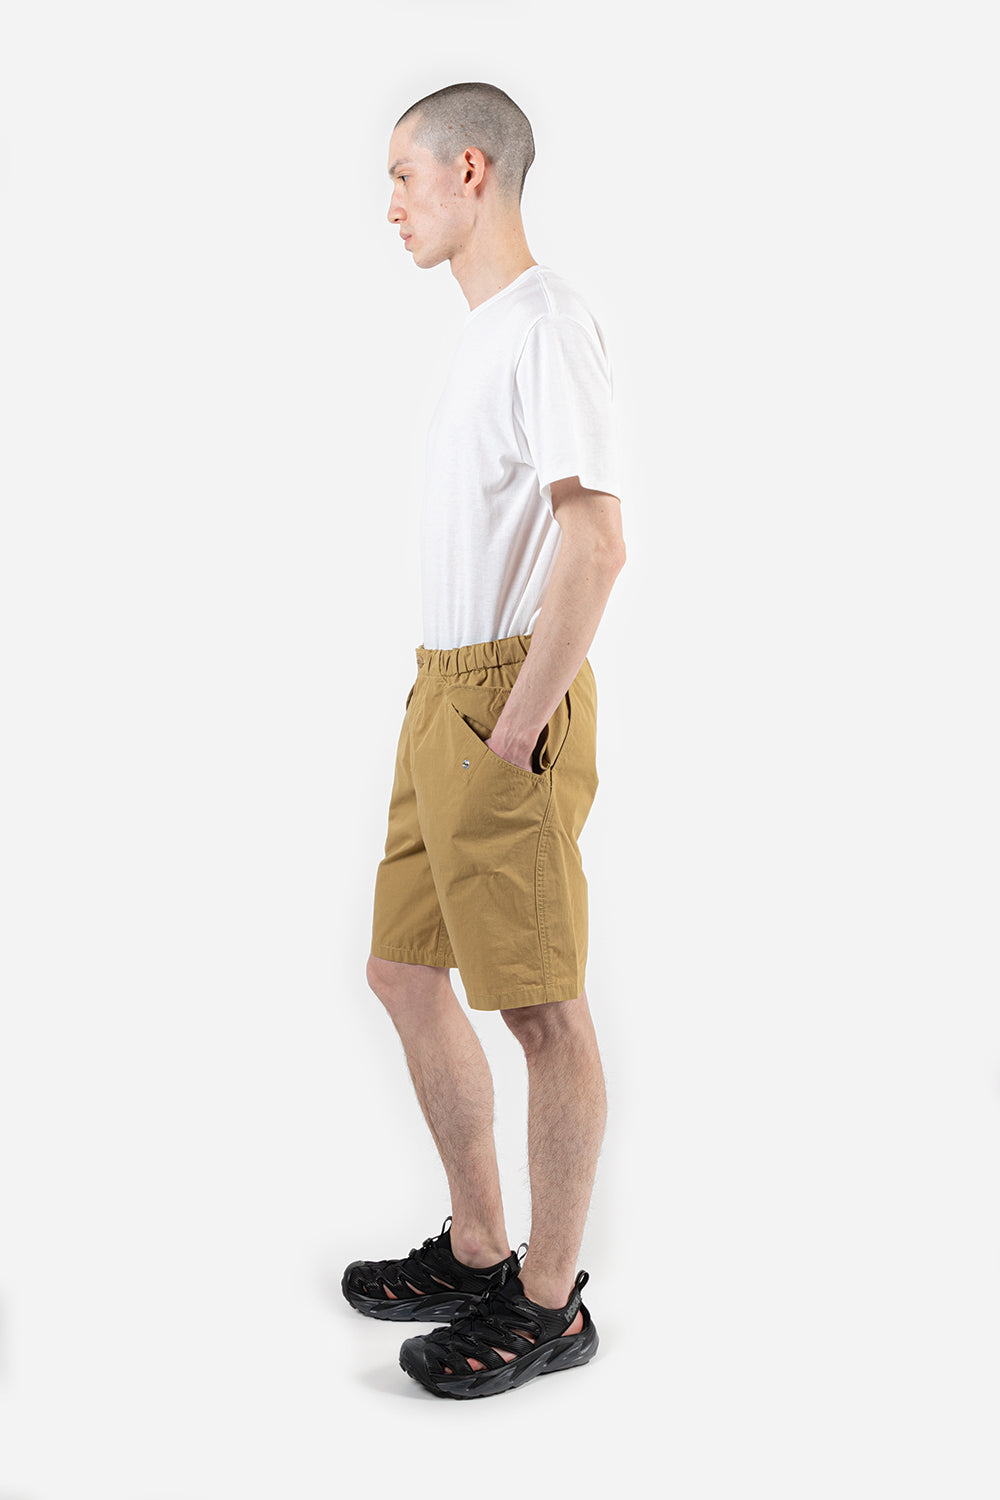 goldwin-relax-easy-shorts-beige